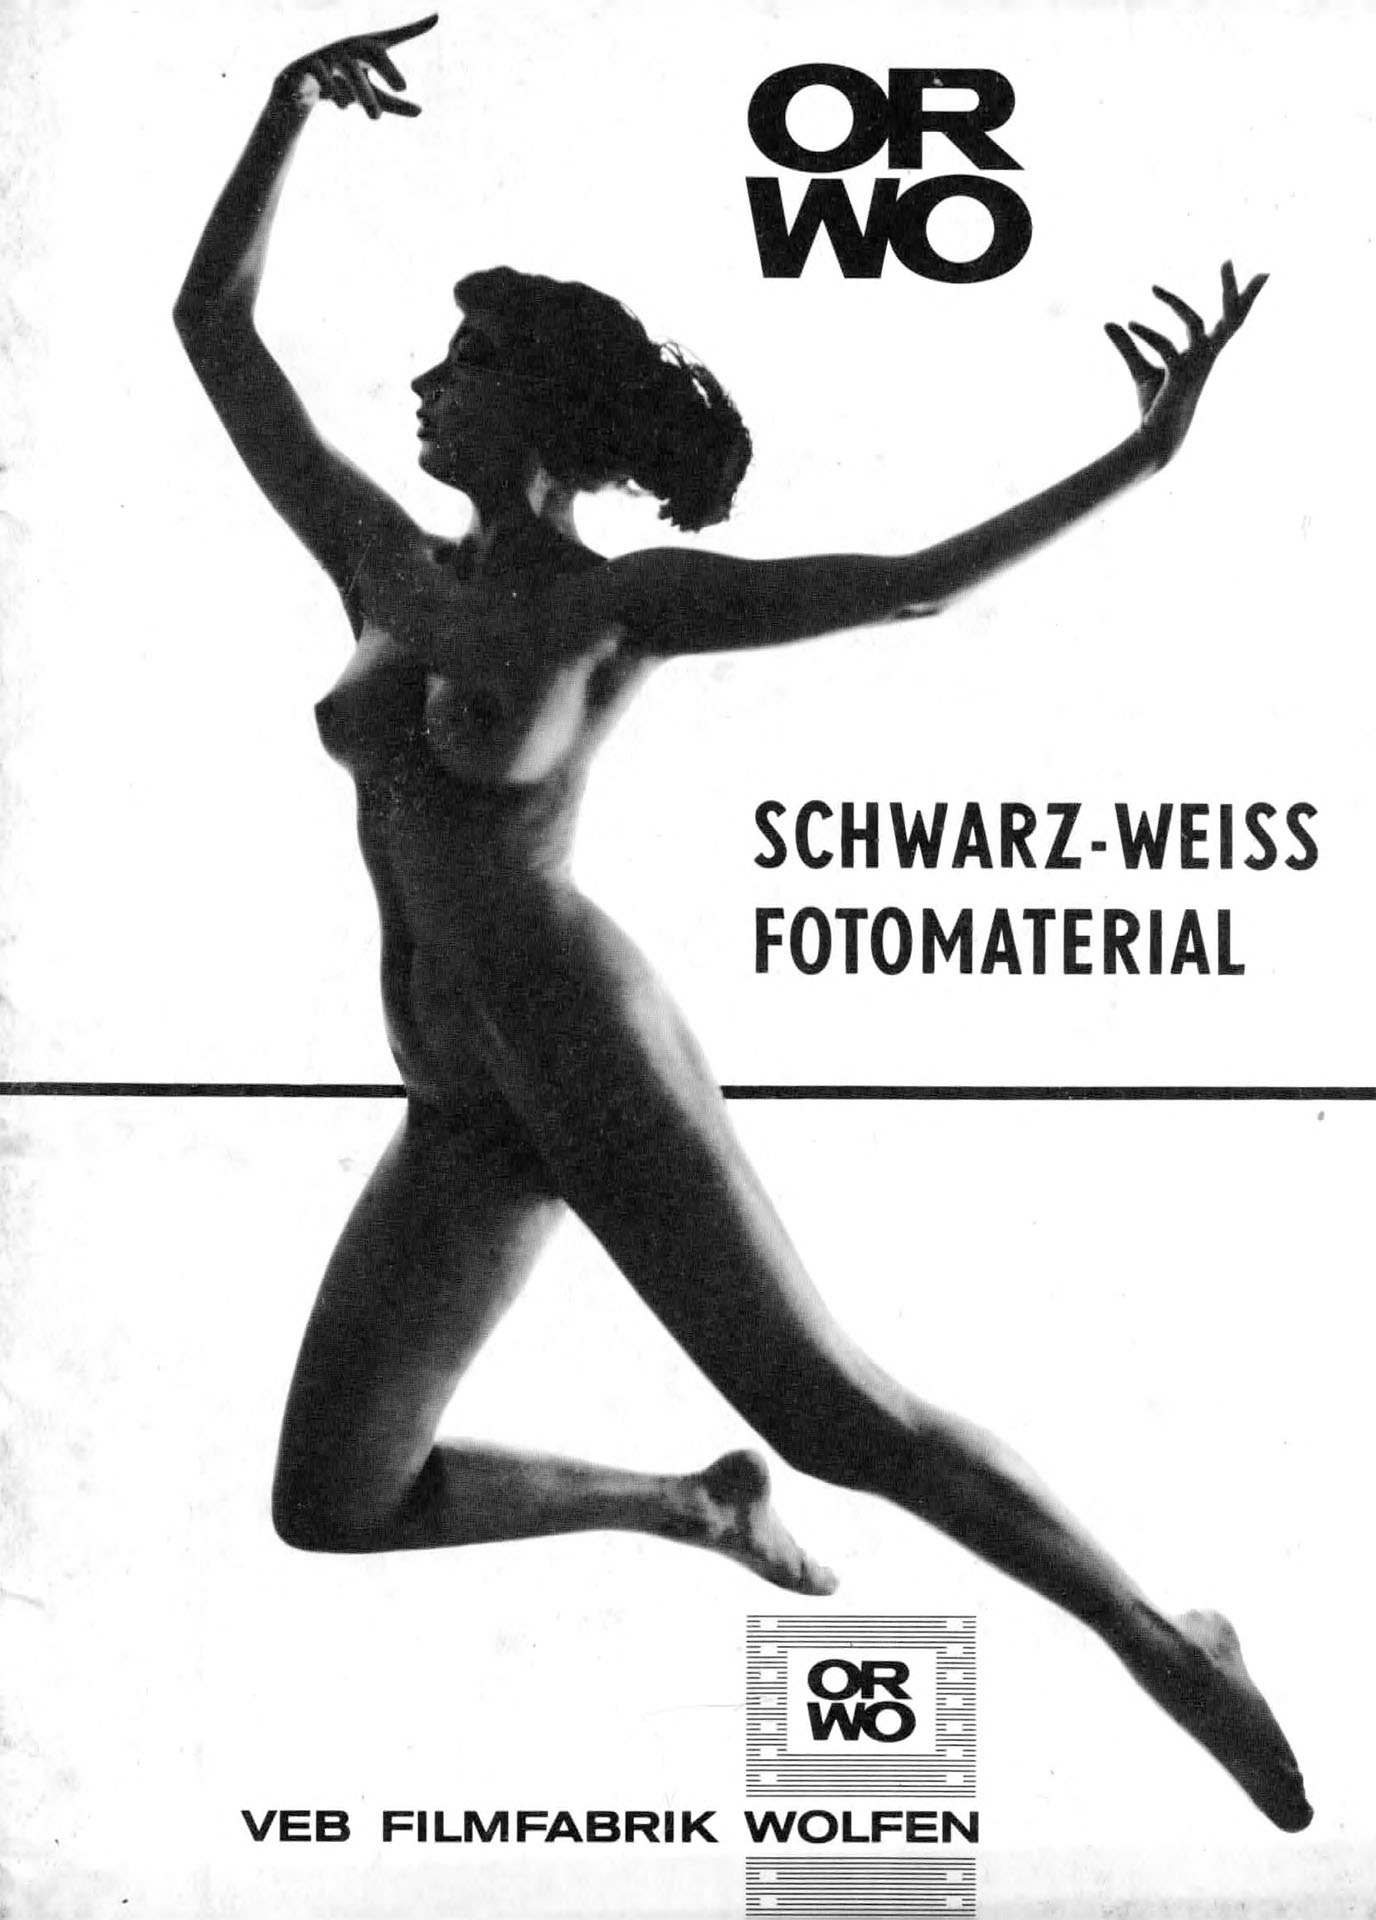 ORWO Schwarz - Weiss Fotomaterial - VEB Filmfabrik Wolfen